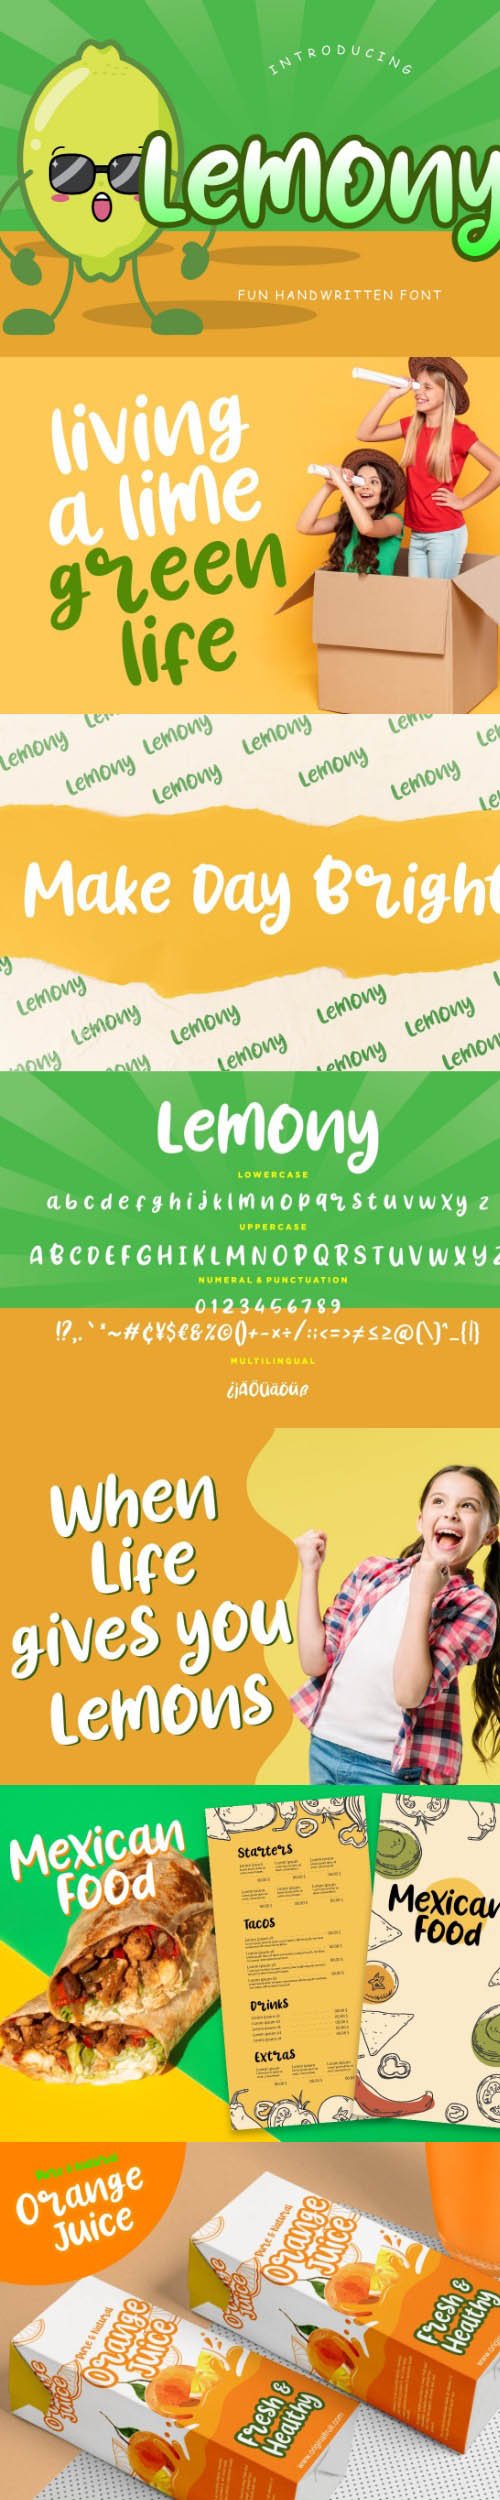 Lemony Fun Handwritten Font